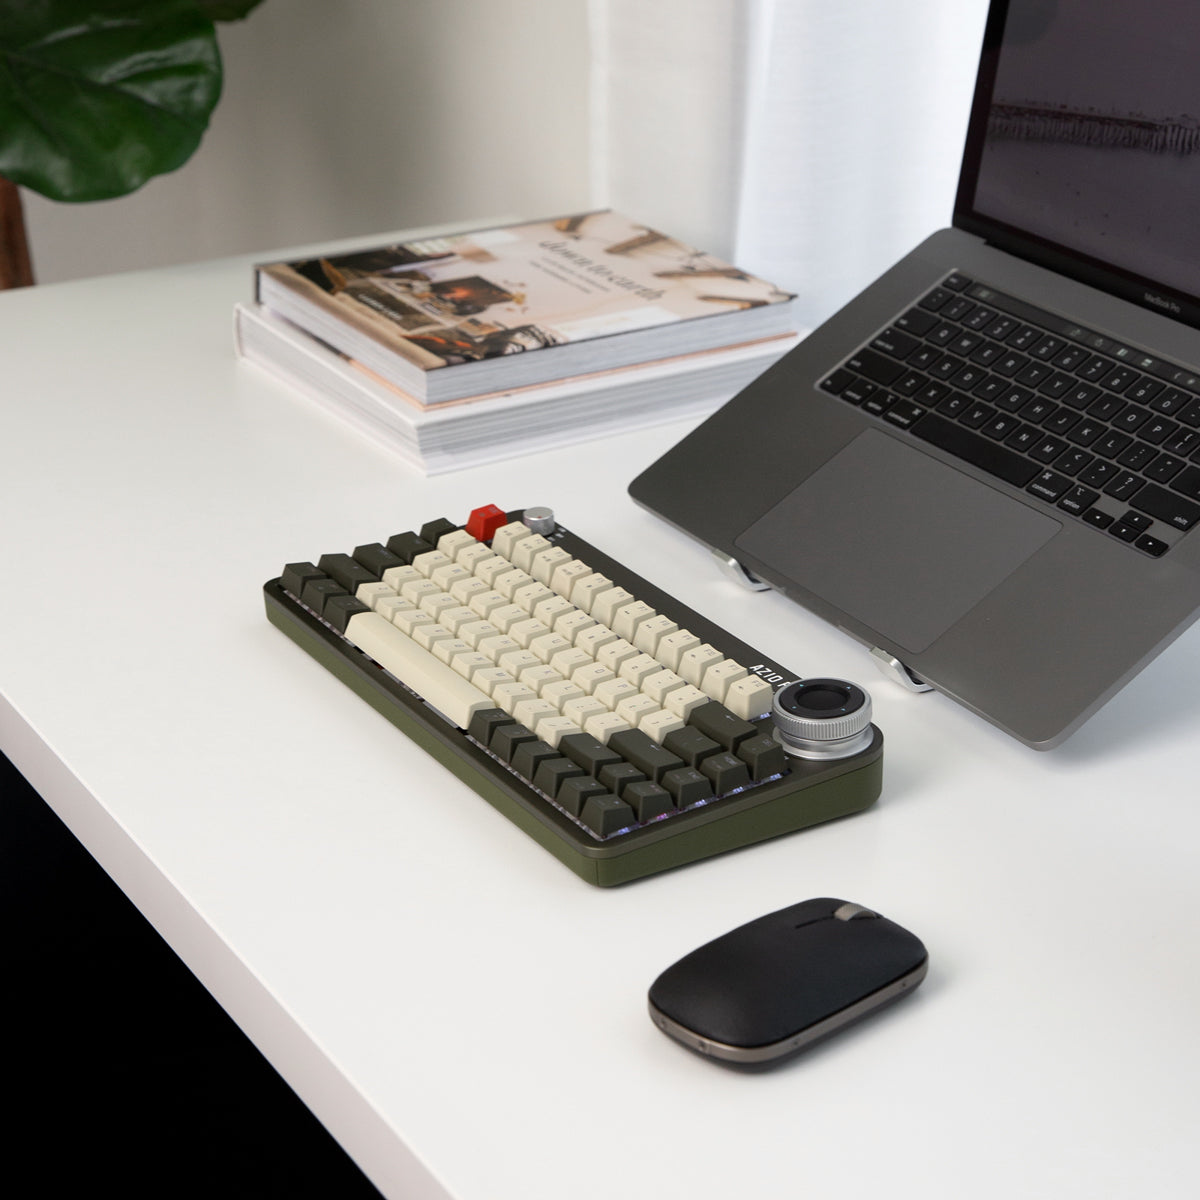 FOQO Pro Wireless Hot-Swappable Keyboard